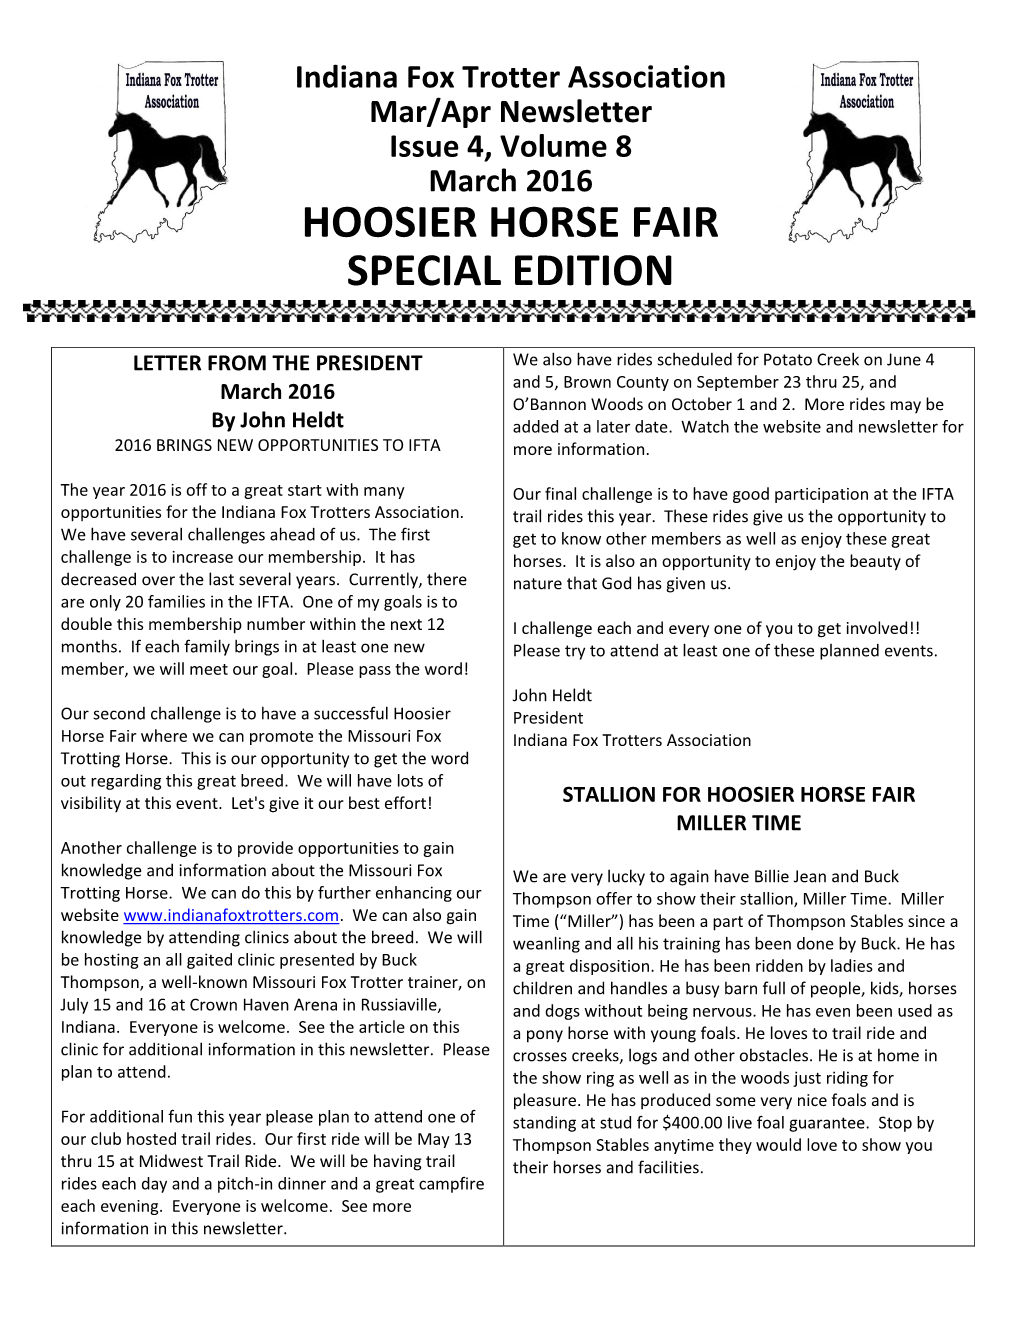 Hoosier Horse Fair Special Edition